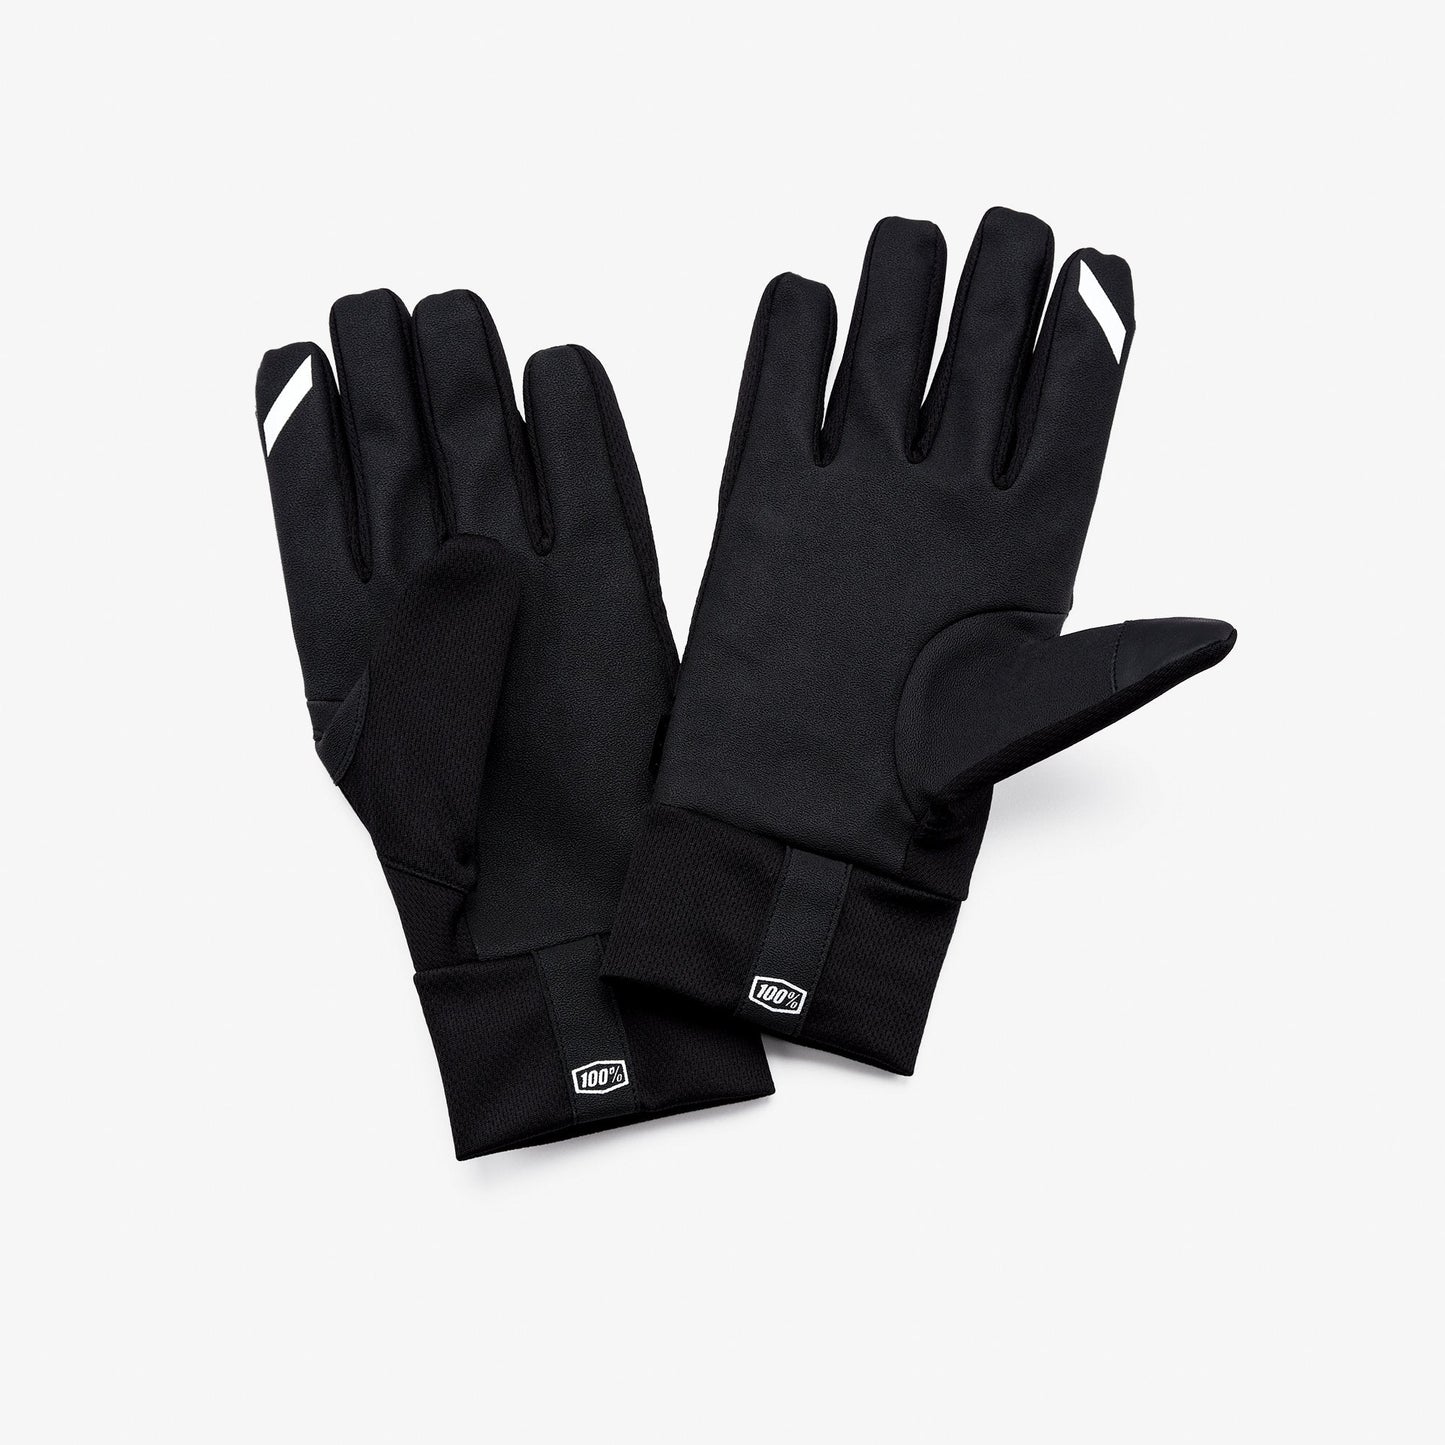 100% Hydromatic Waterproof gloves